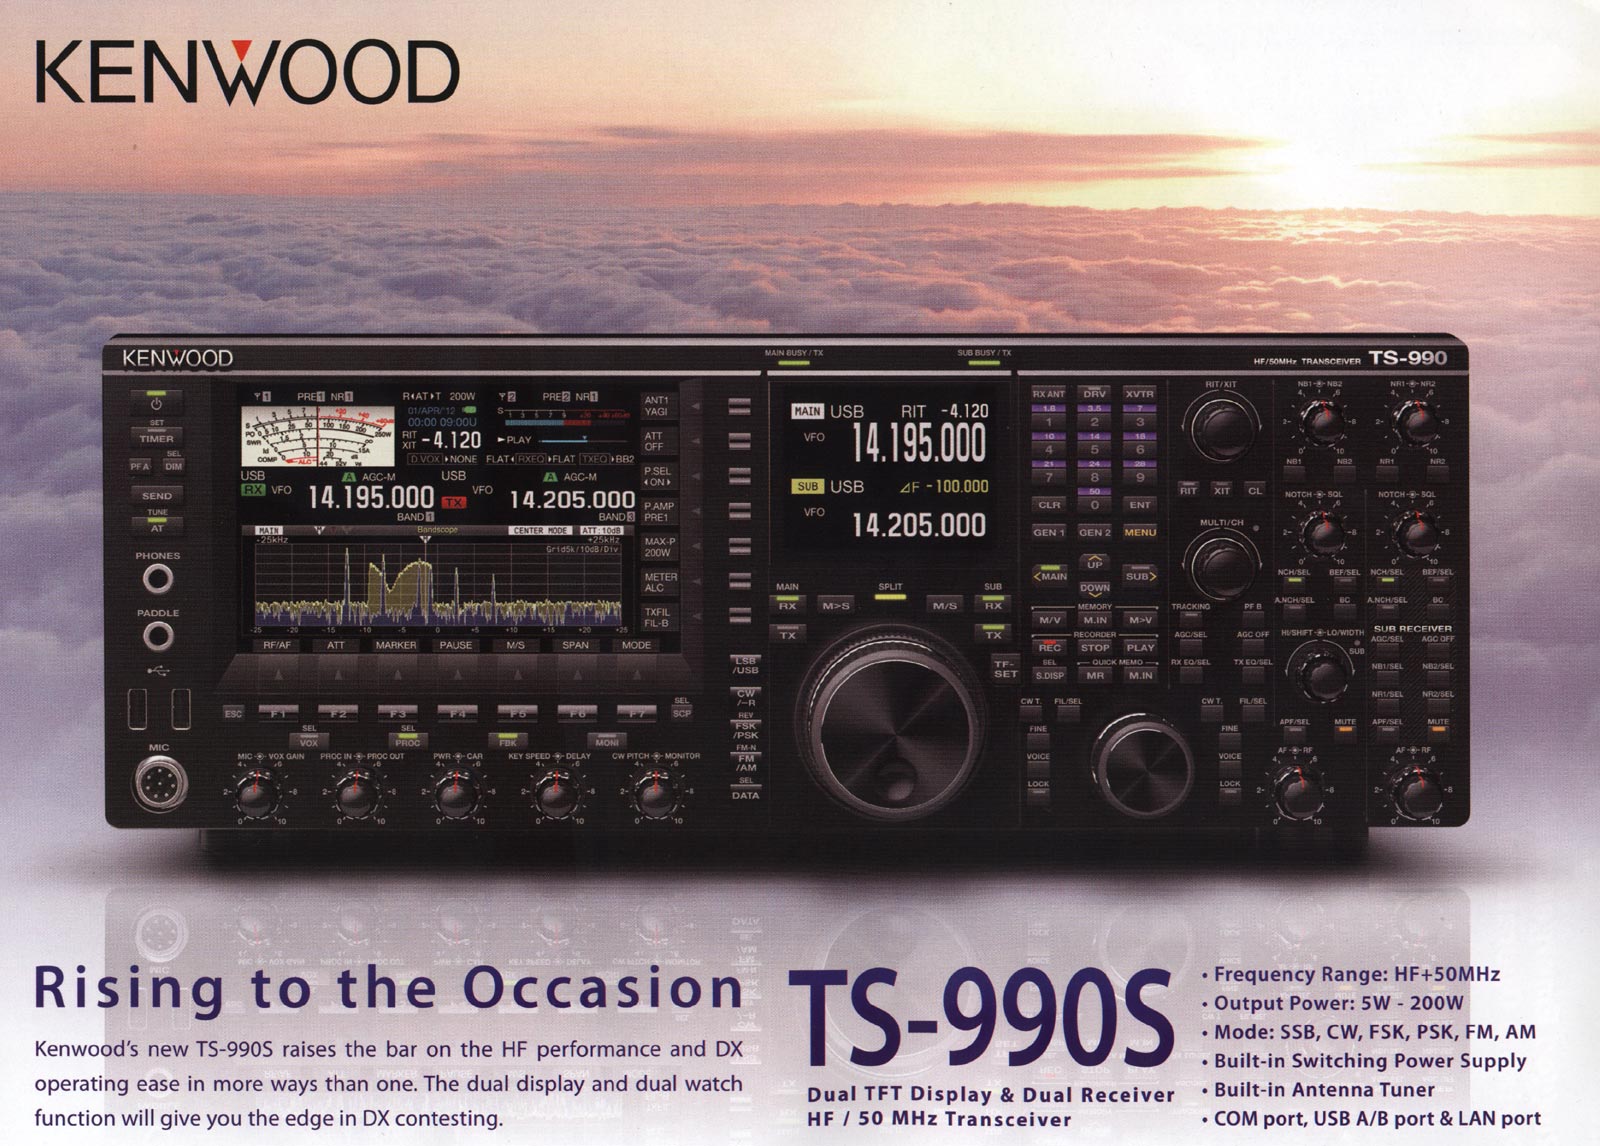 Kenwood TS-990 Accessories